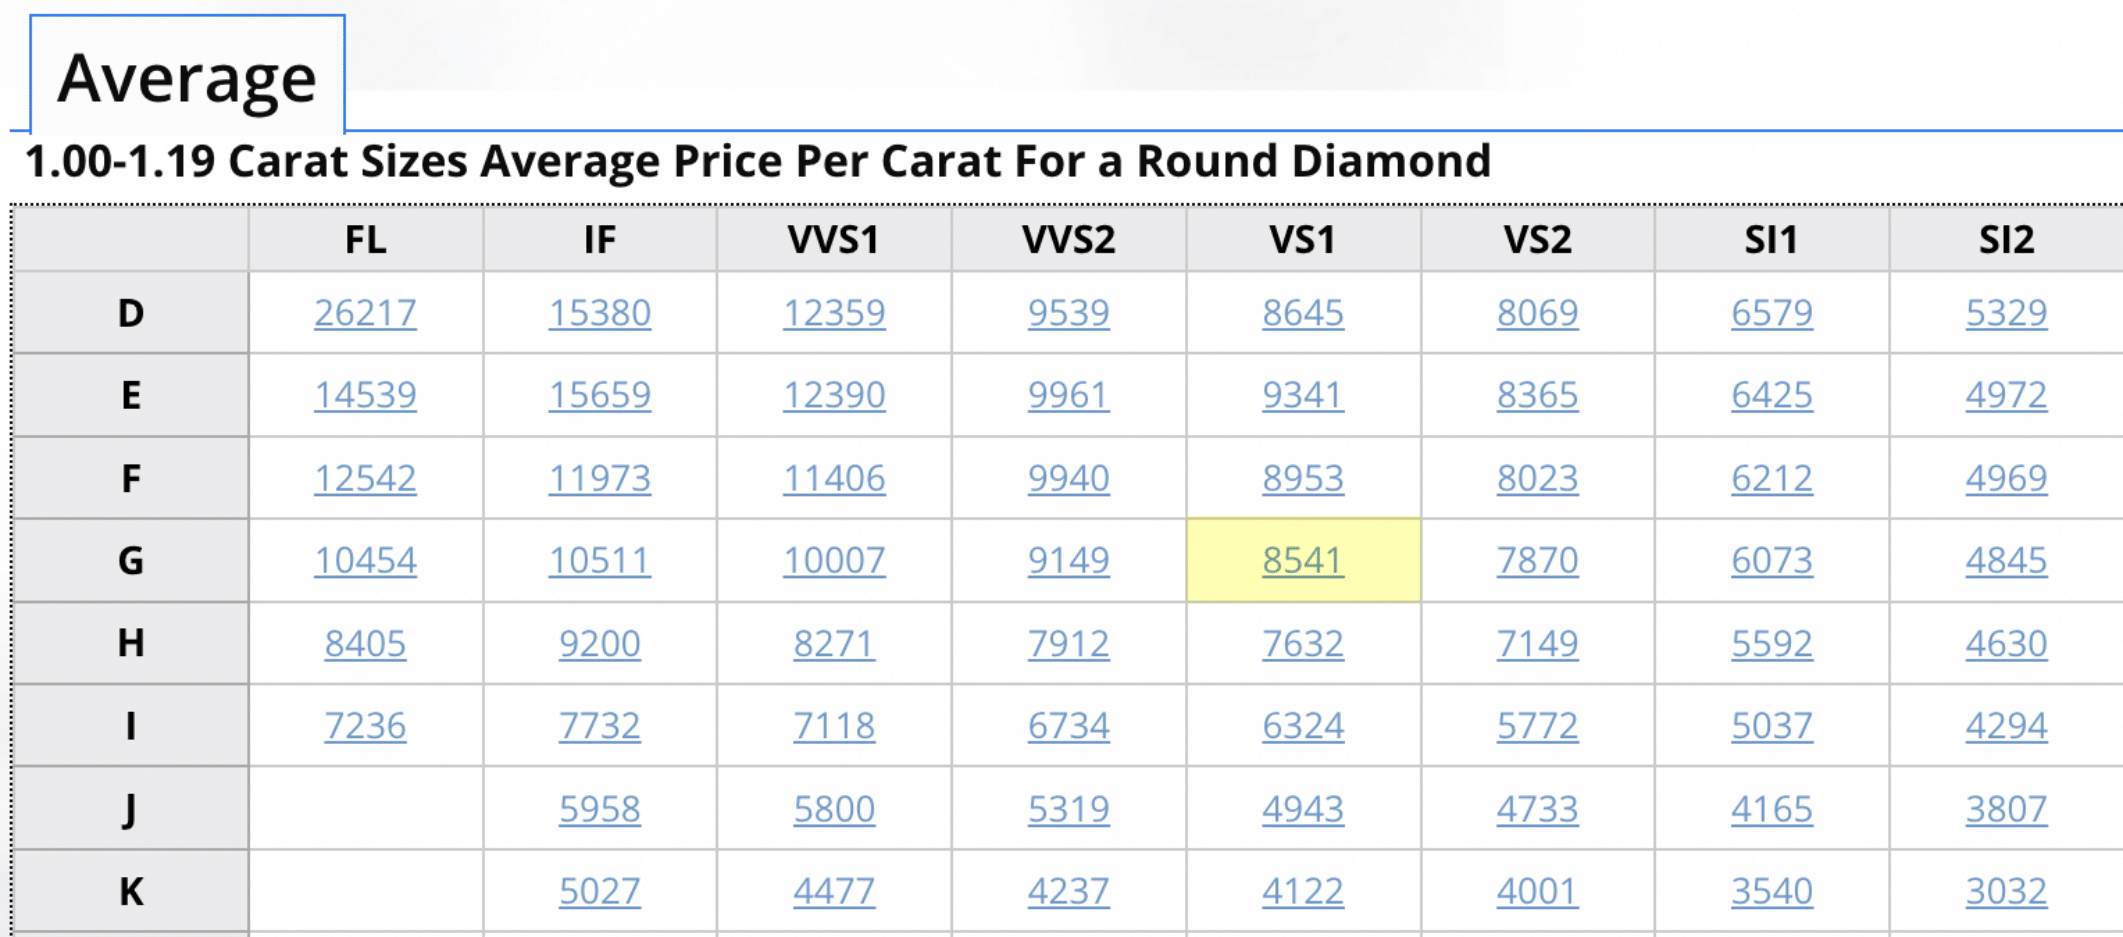 Average Price Per Carat For a Round Diamond - January 2023